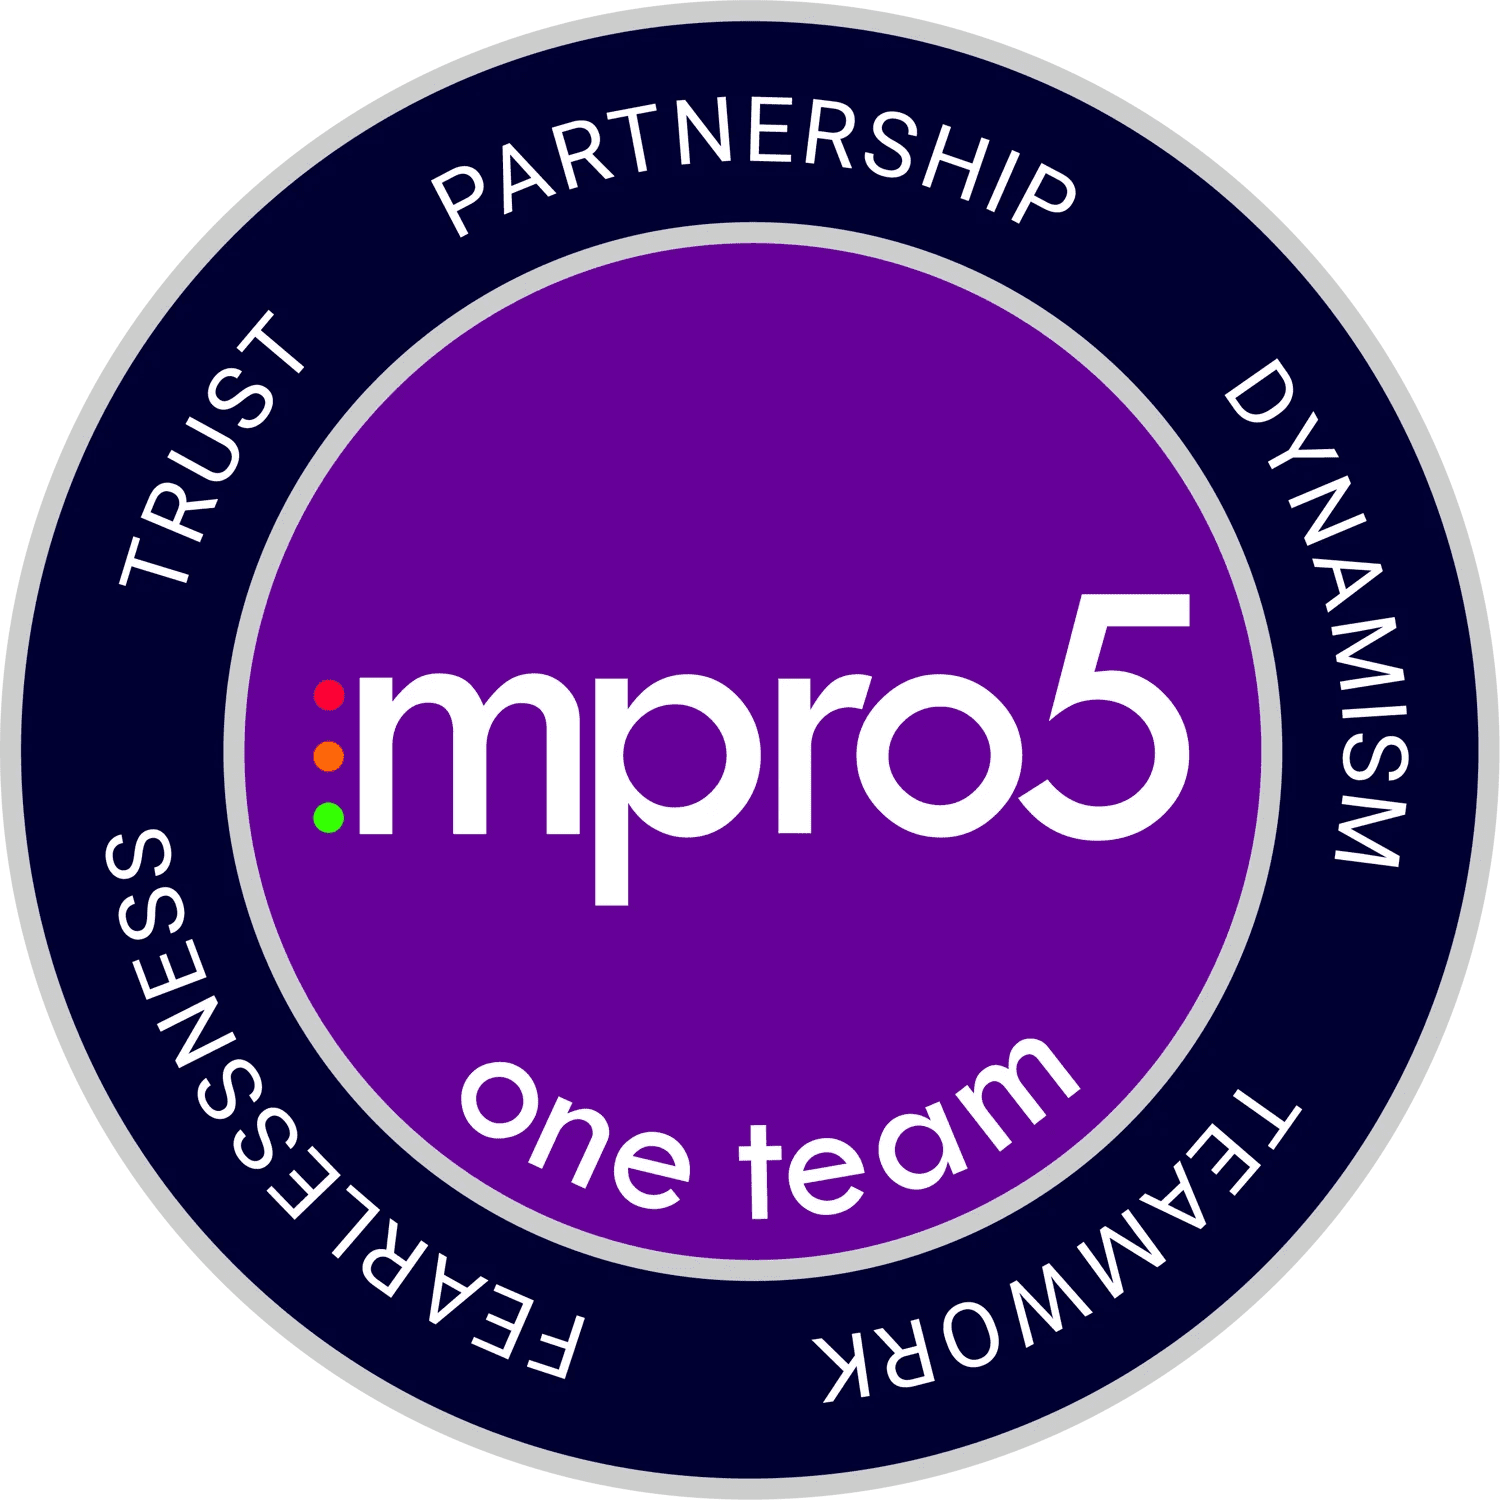 mpro5 one team icon-min